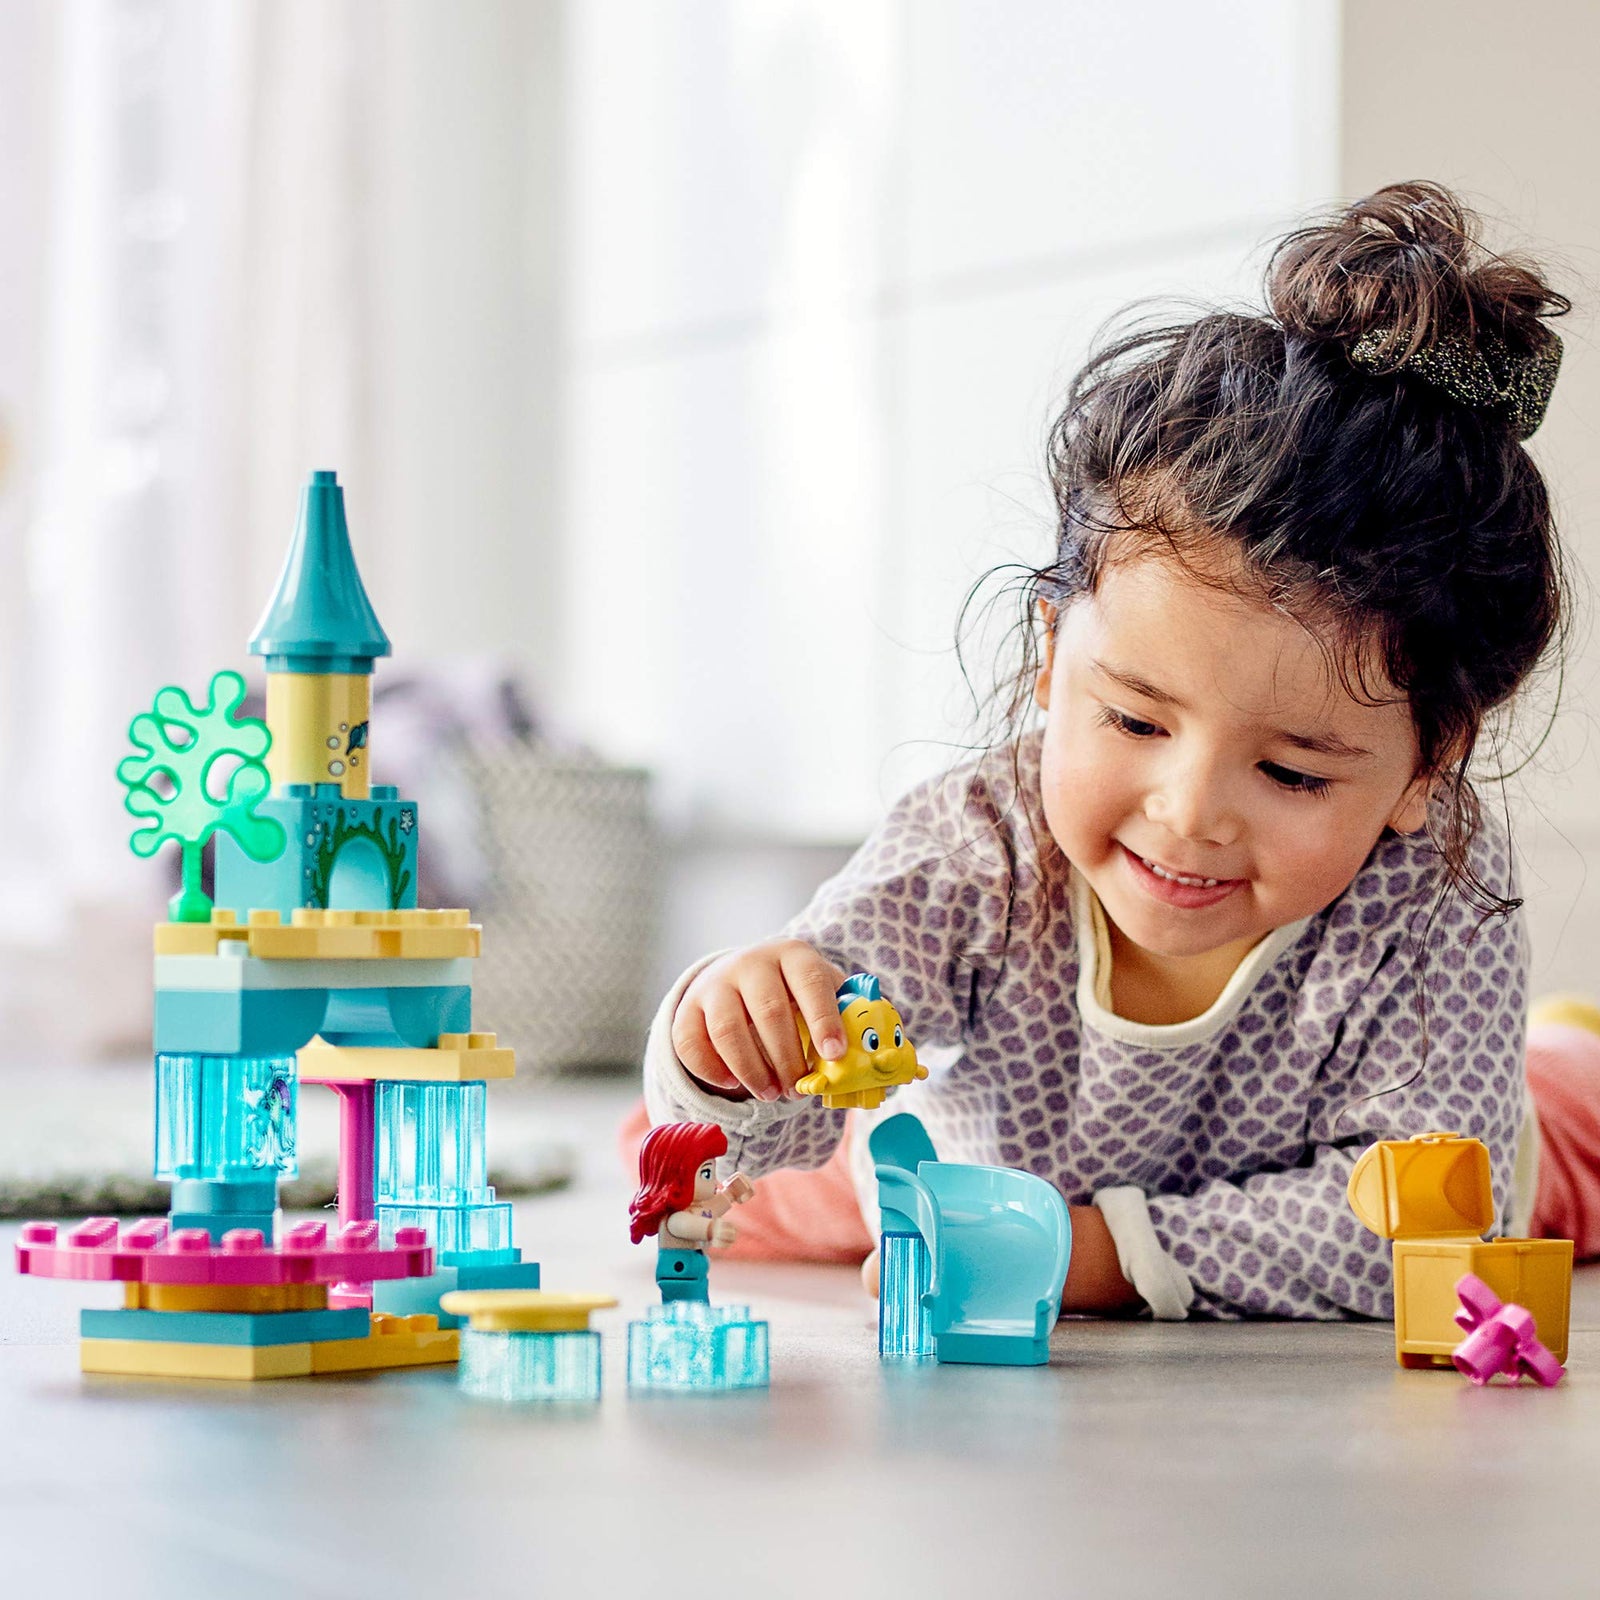 LEGO DUPLO Disney Ariel's Undersea Castle 10922 Imaginative Building Toy for Kids; Ariel and Flounder’s Princess Castle Playset Under The Sea, New 2020 (35 Pieces)